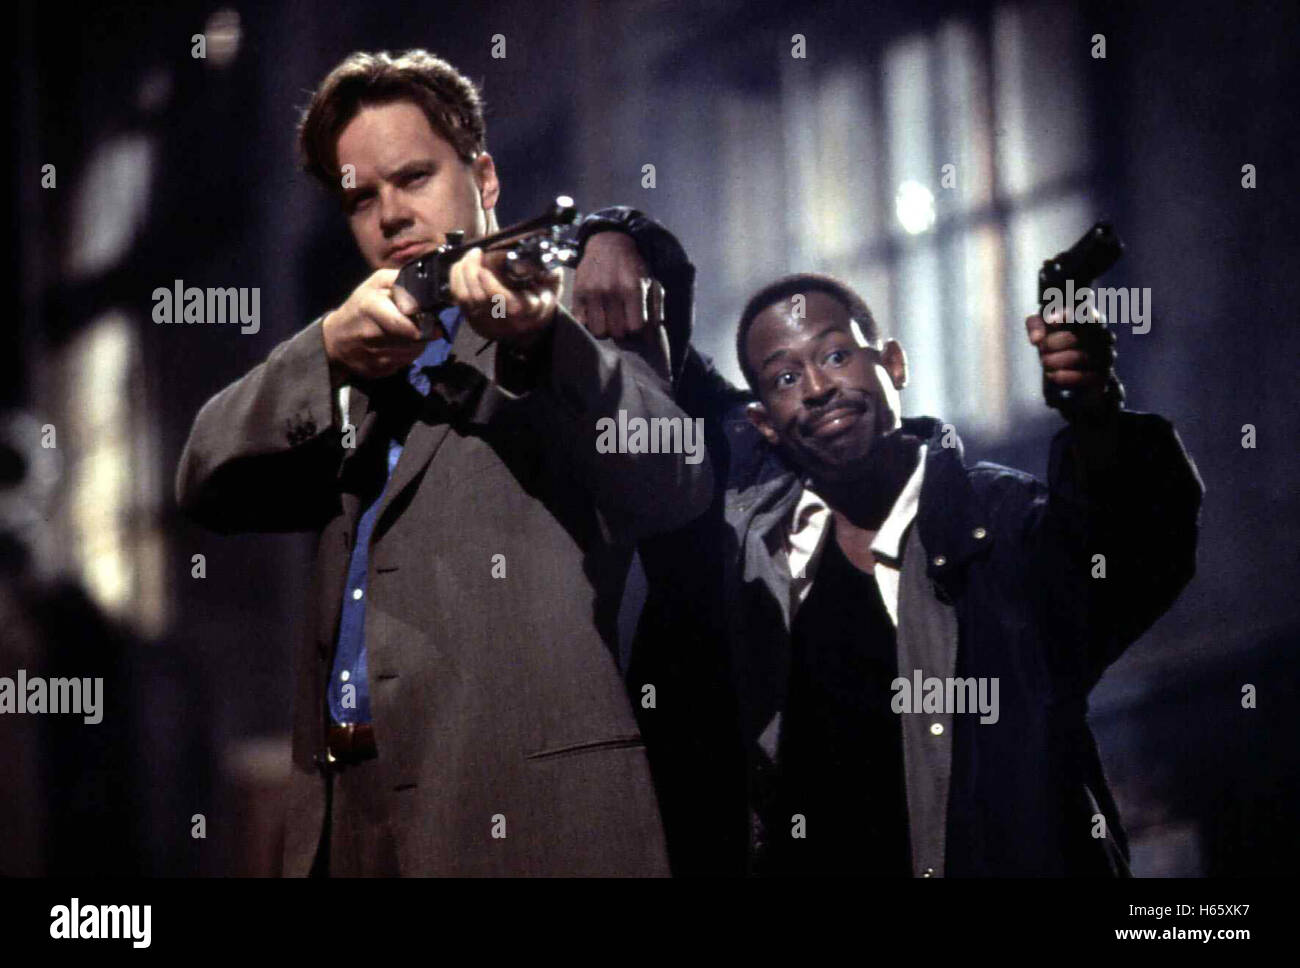 Nix zu verlieren (1997) aka: Nothing to Lose, Director: Steve Oedekerk, Actors/Stars: Martin Lawrence, Tim Robbins, John C. McGinley Stock Photo